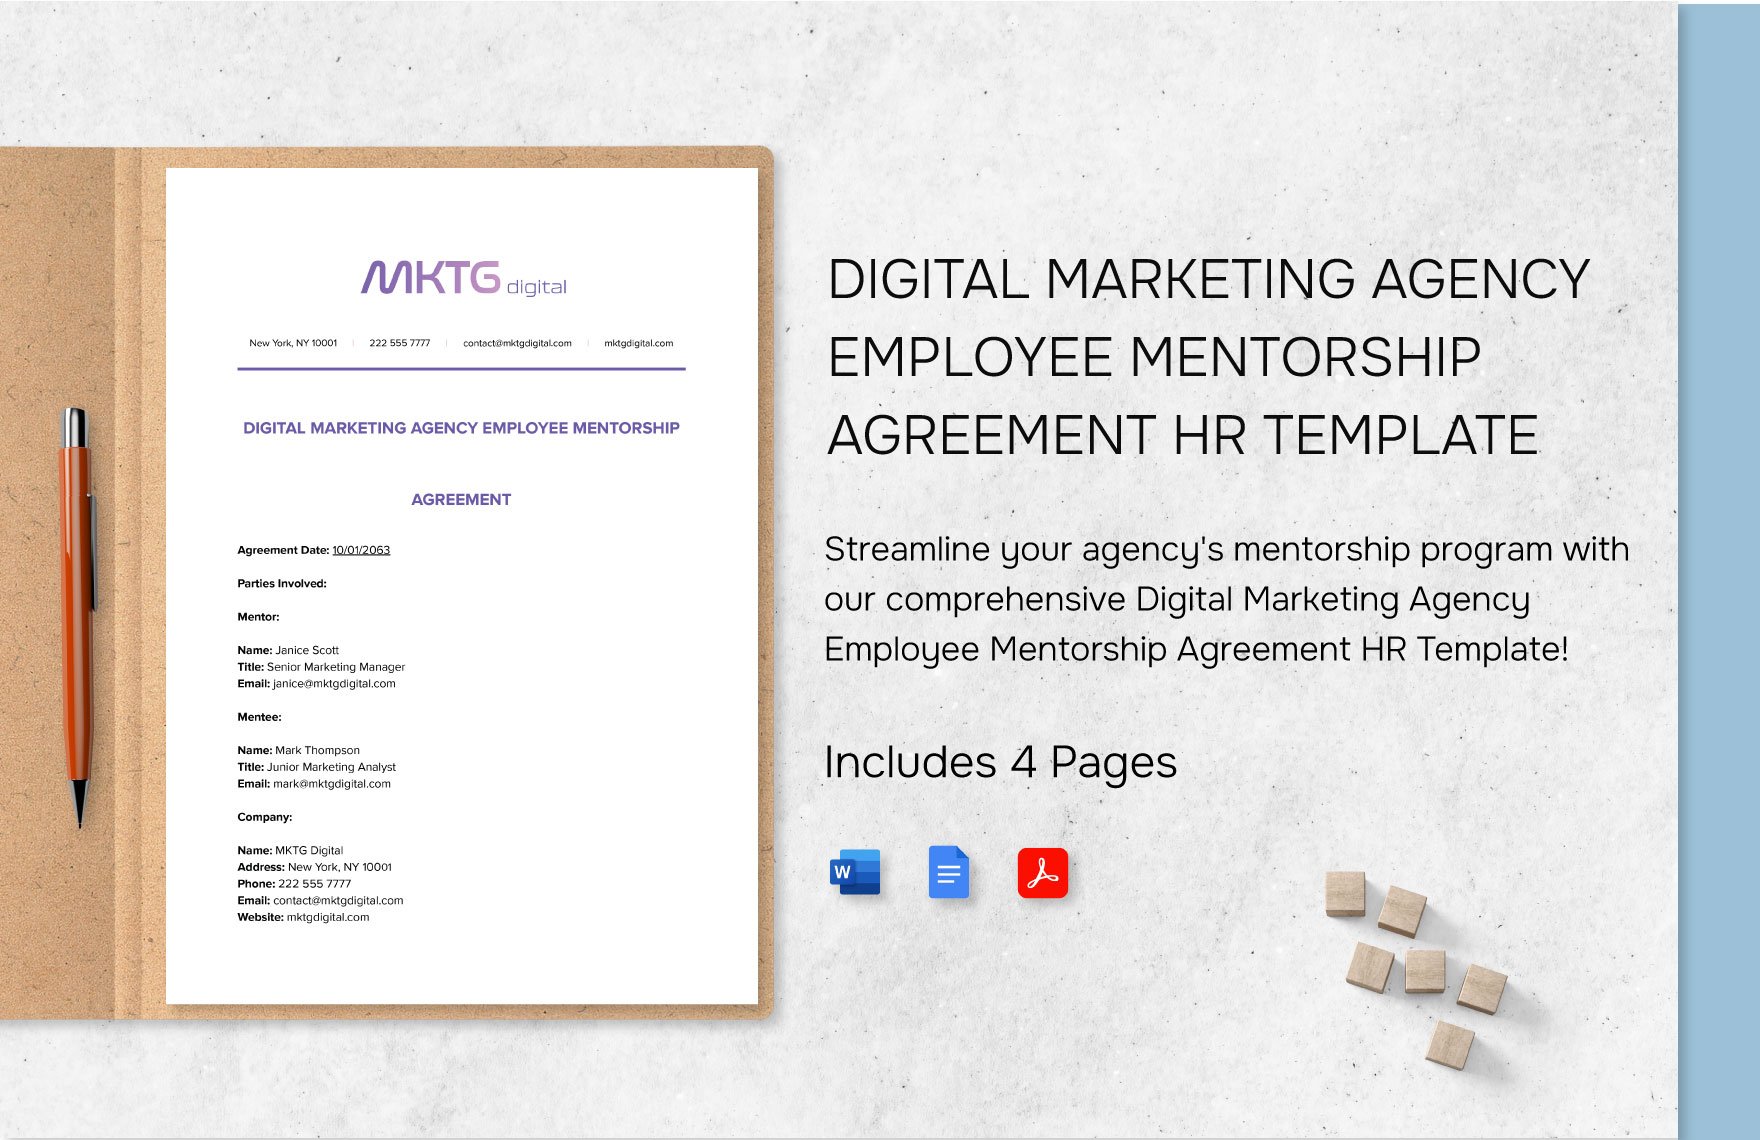 Digital Marketing Agency Employee Mentorship Agreement HR Template